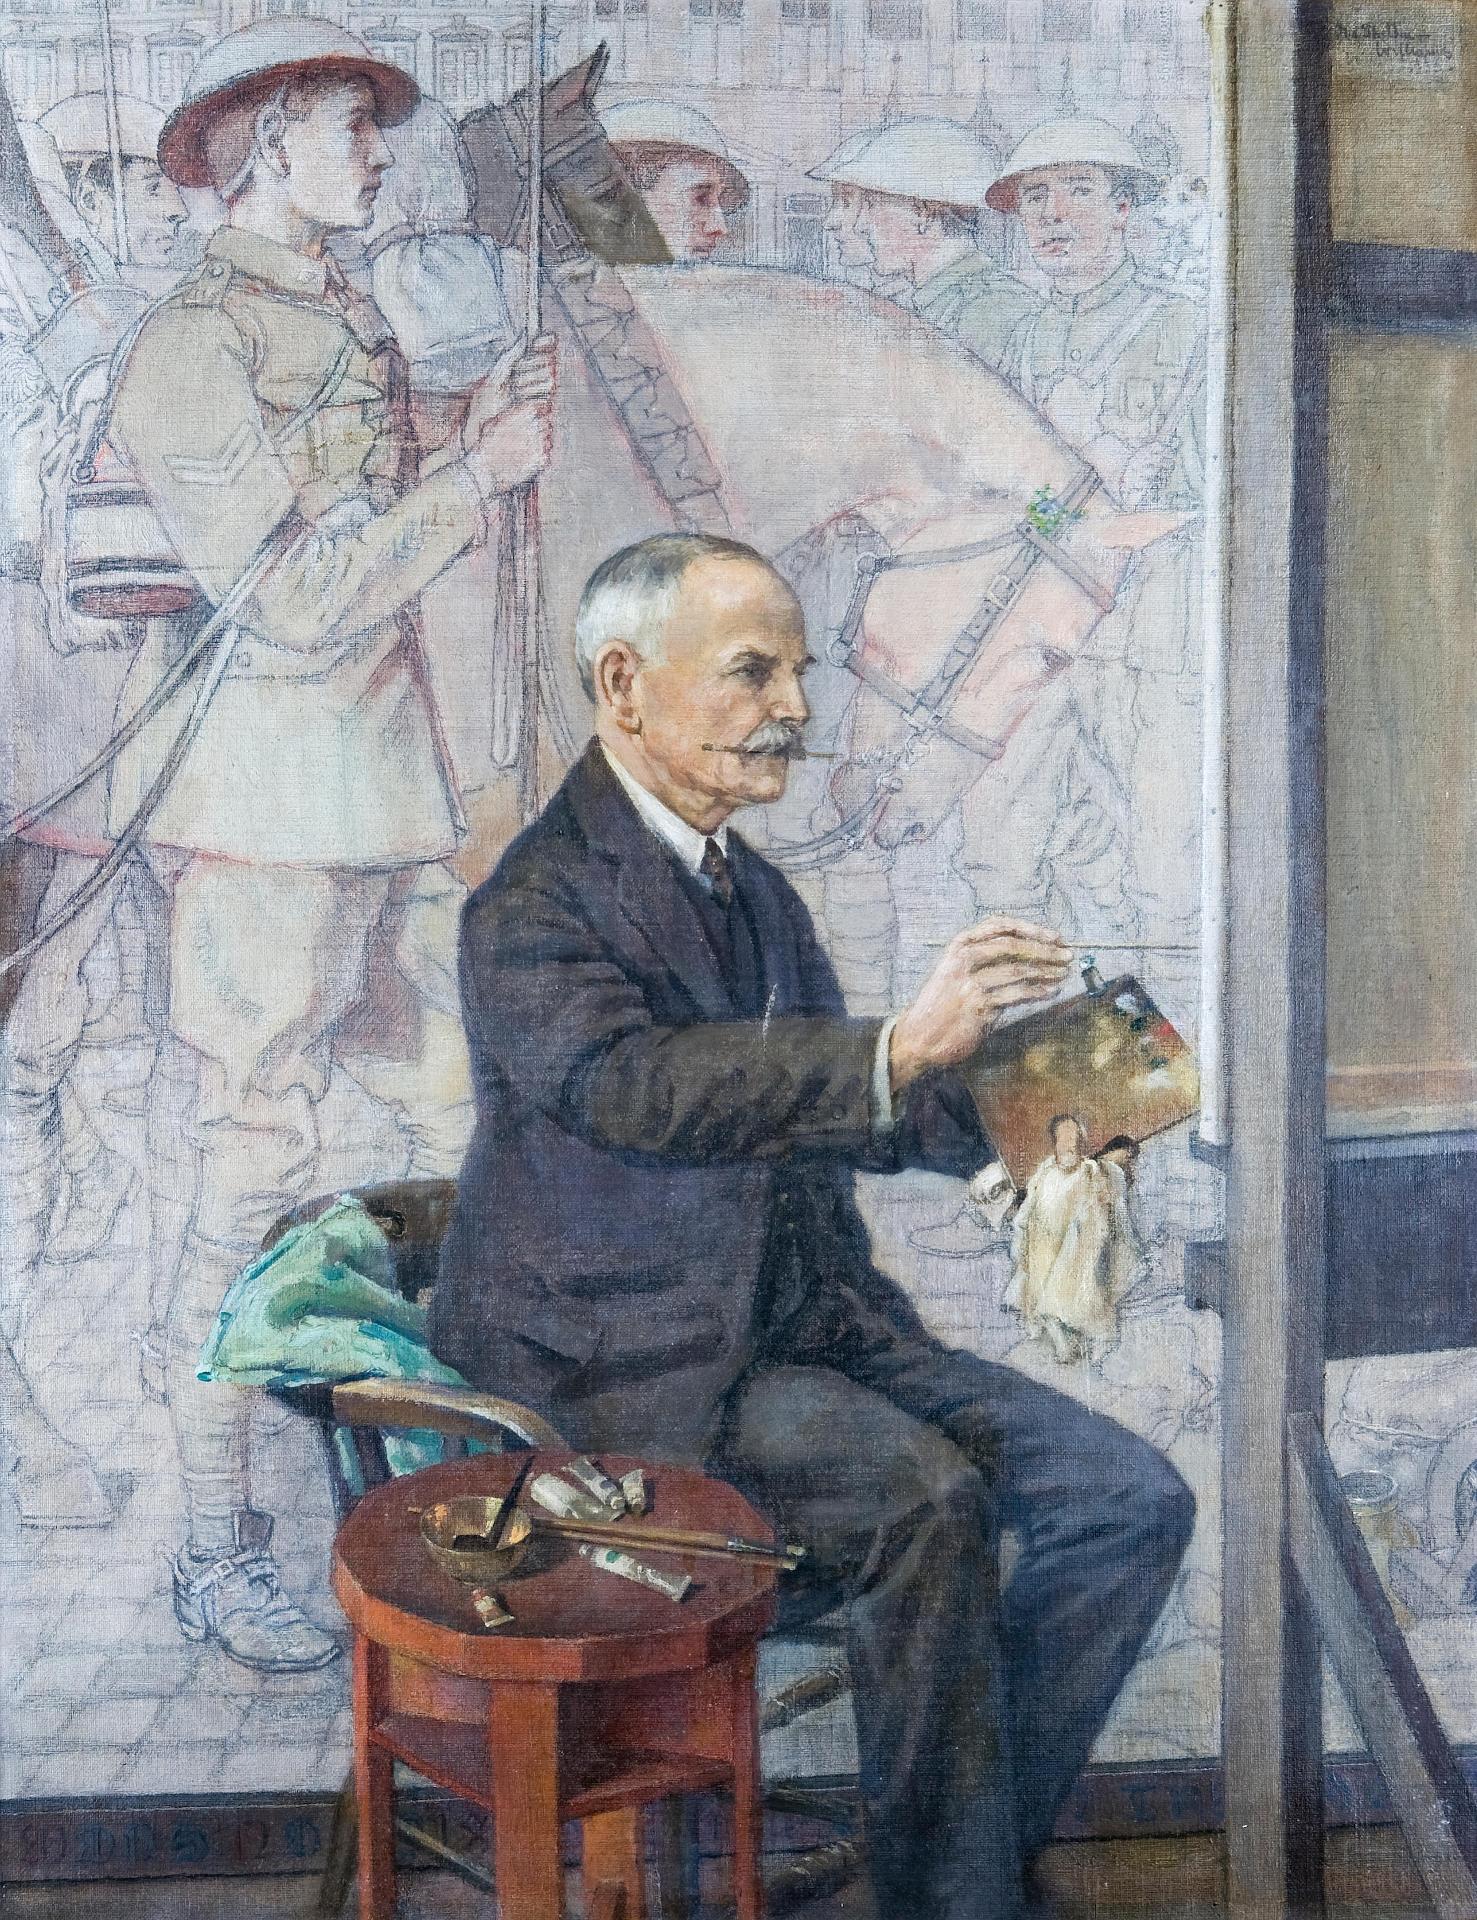 Ina Maud - Inglis Sheldon-Williams, the artist’s husband, at his studio easel